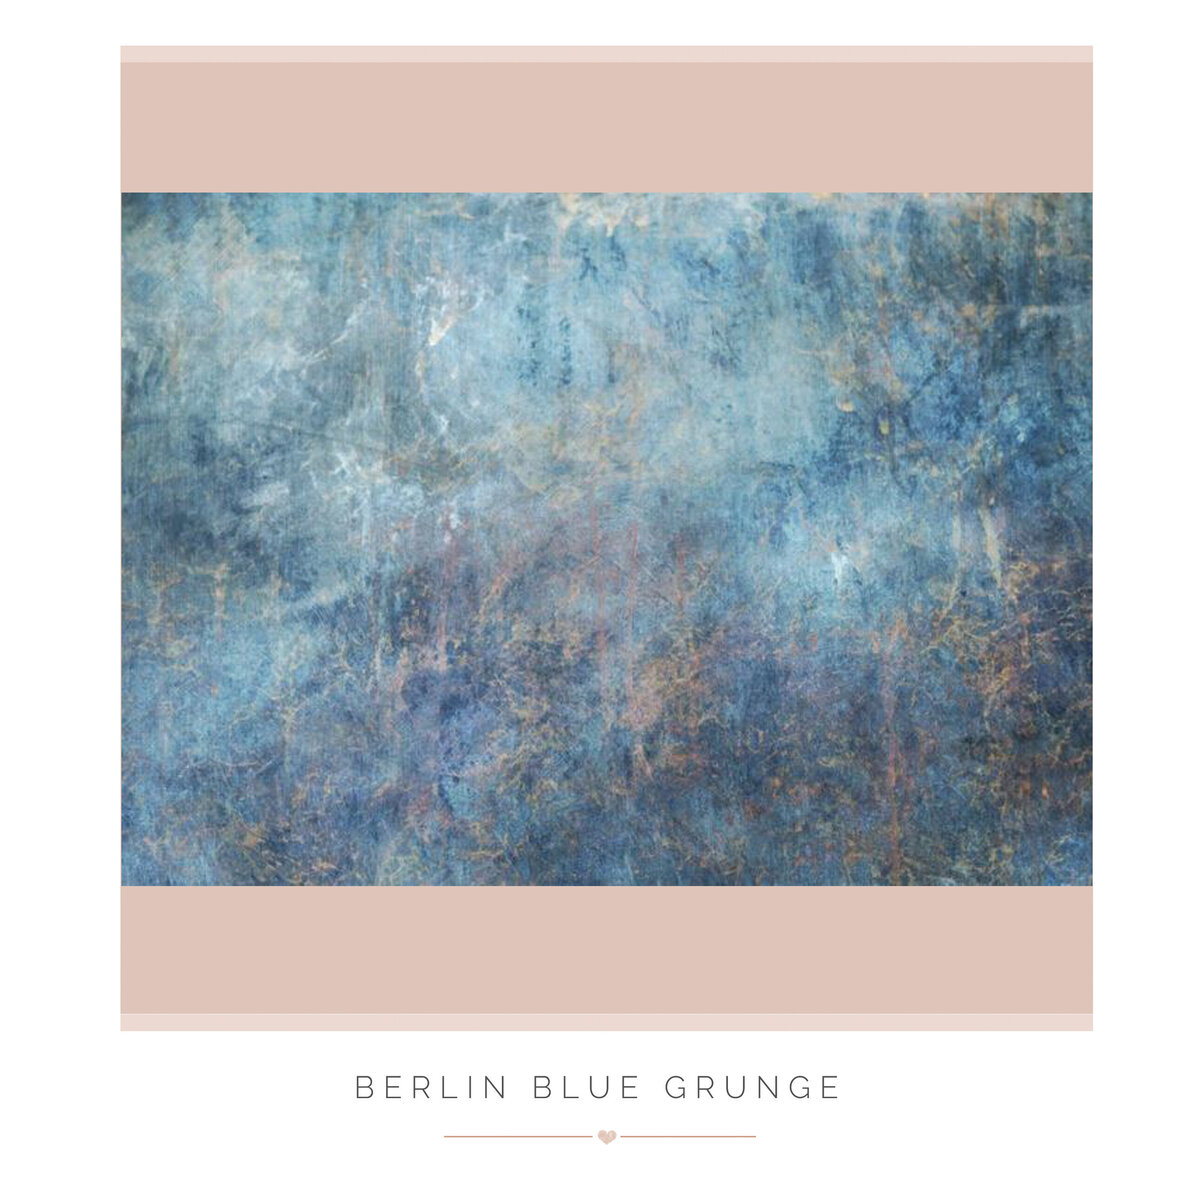 Berlin Blue Grunge